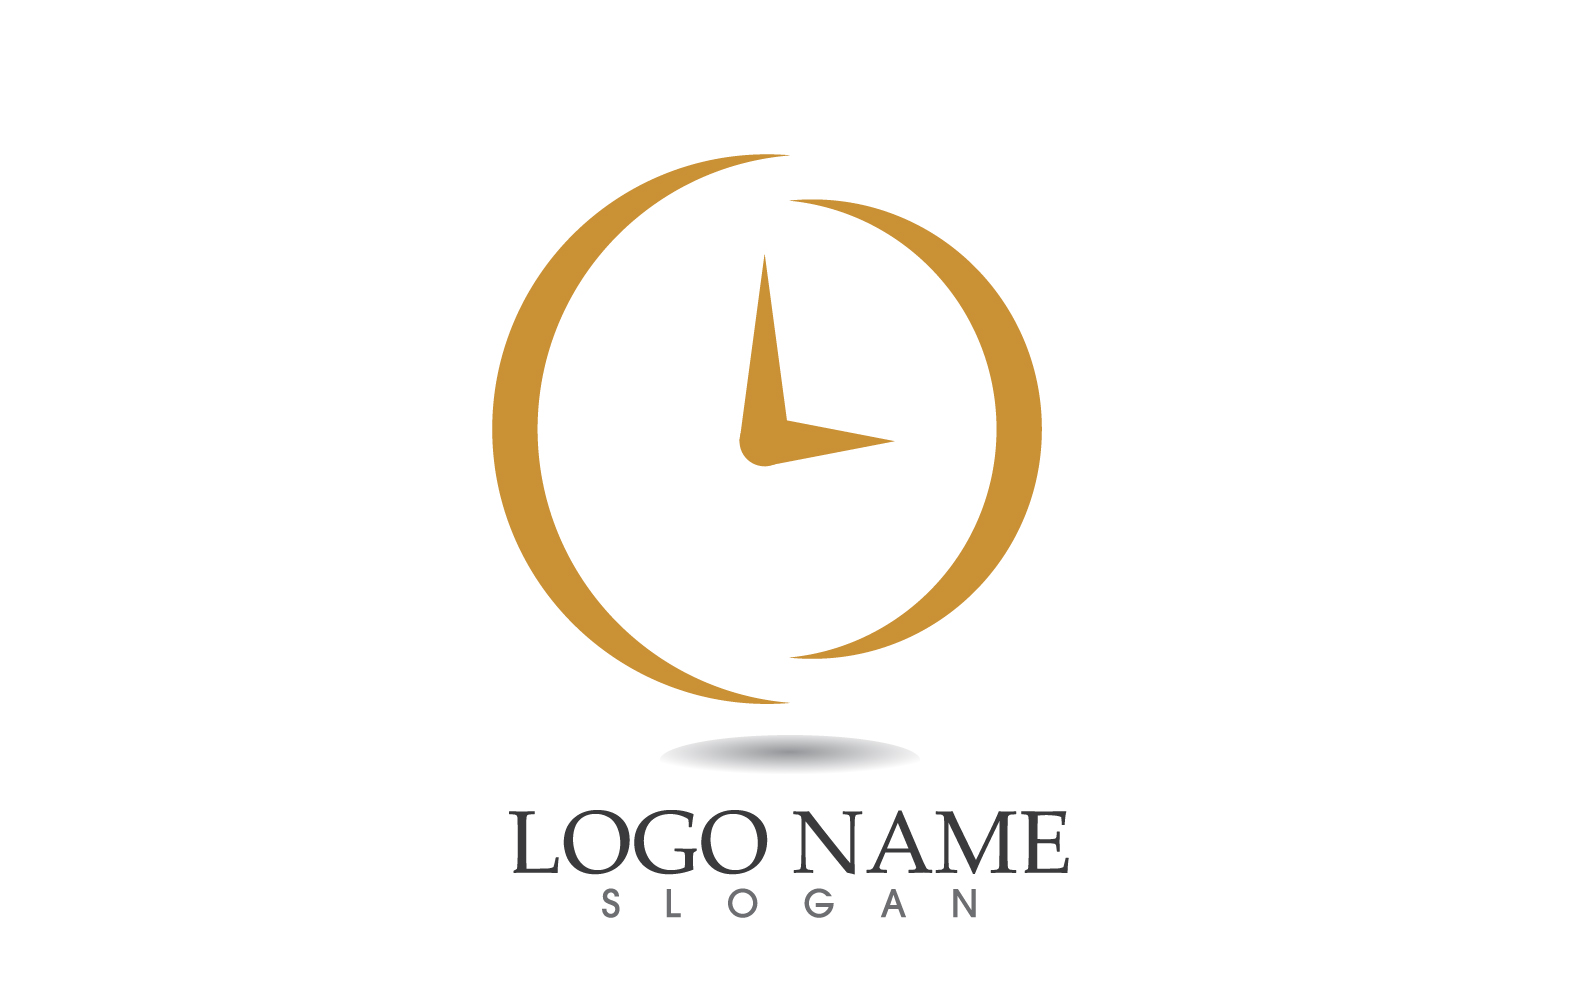 Clock Time business logo vector v3